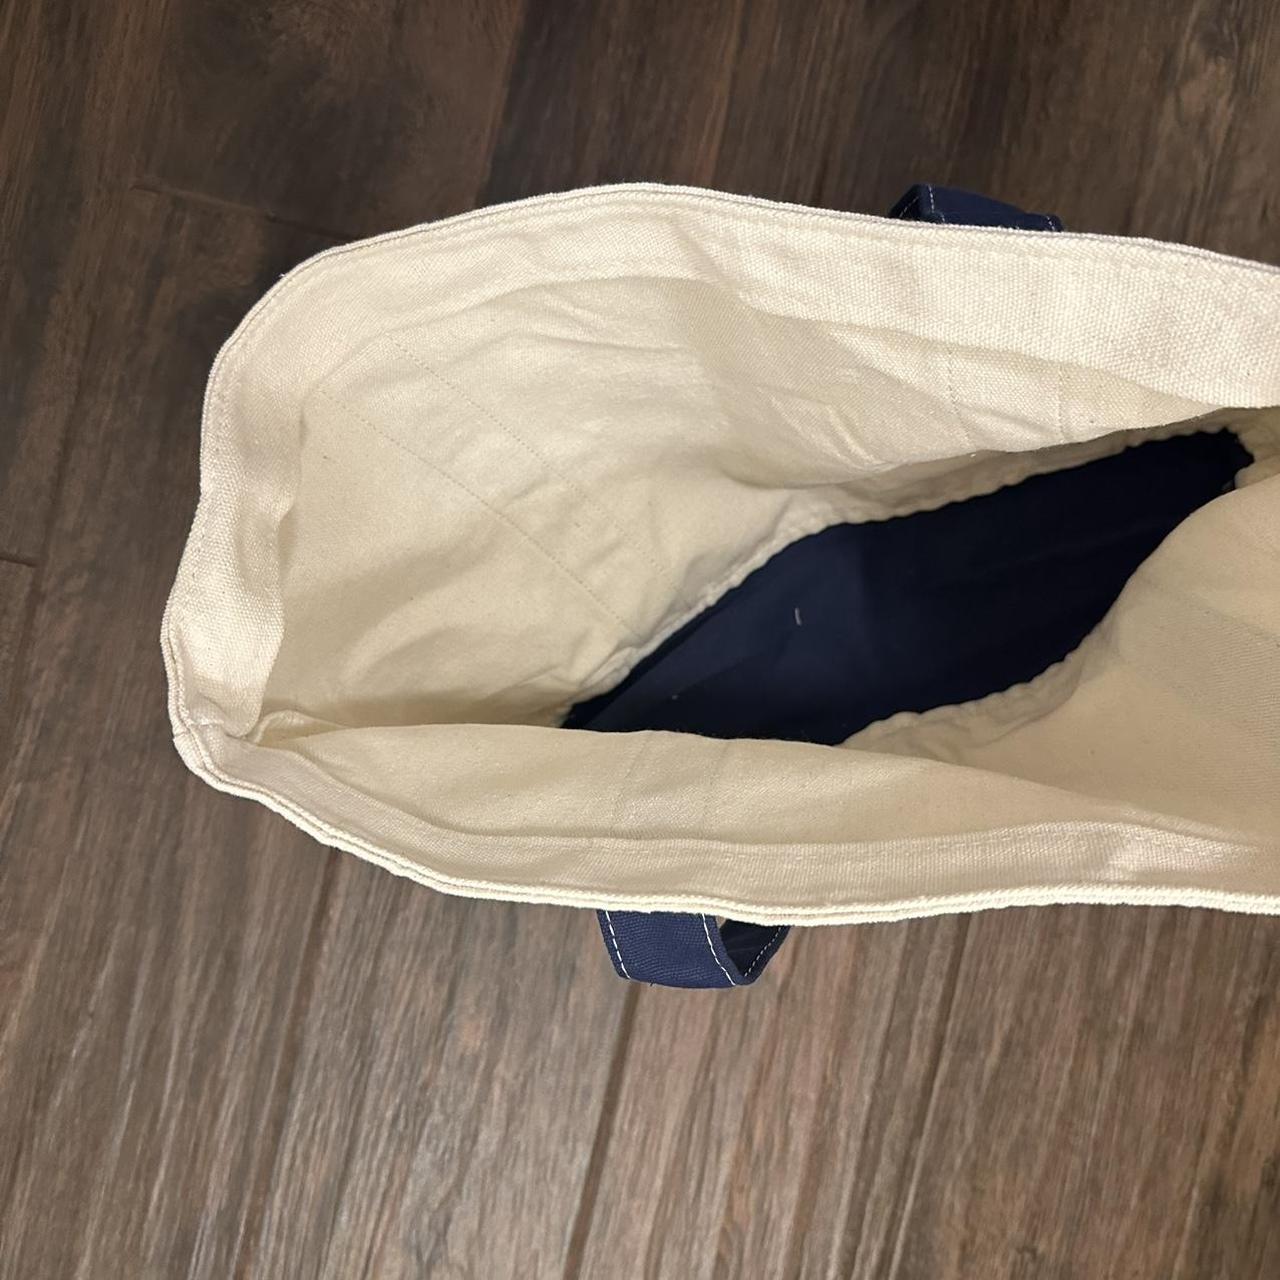 BAPE Tote Bag Please message before buying - Depop